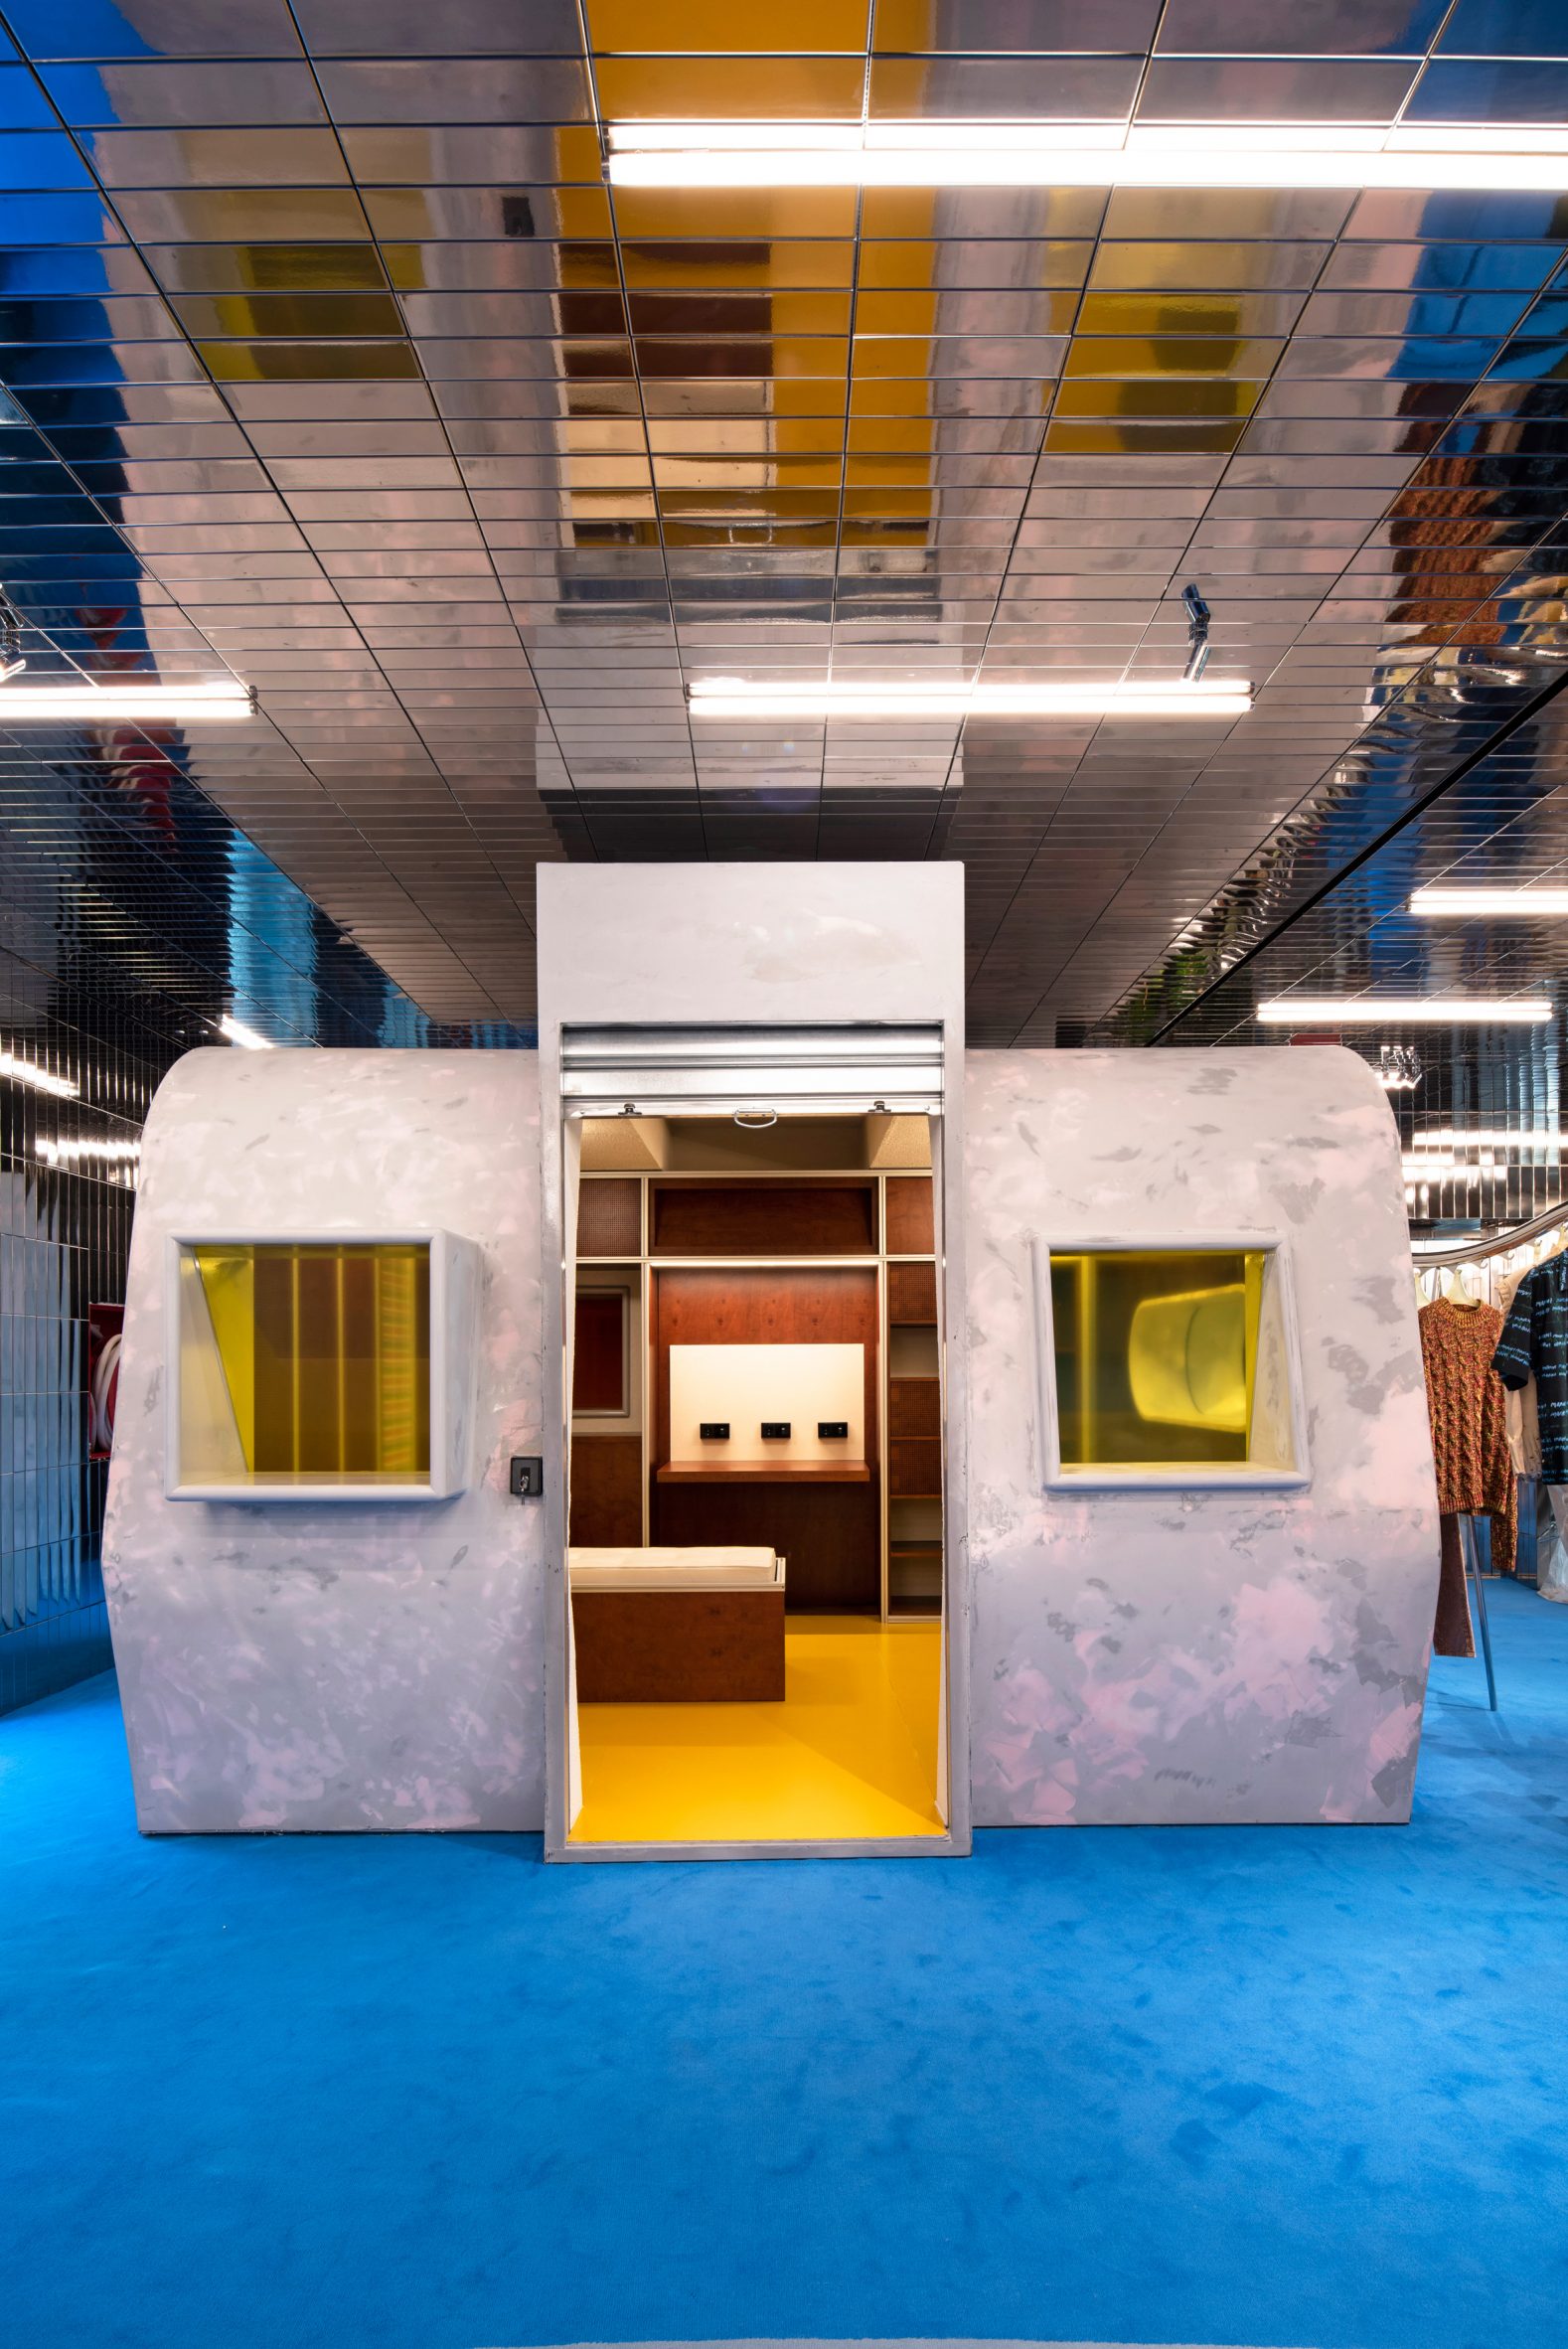 Caravan-shaped artist's studio in Marni's flagship store in Milan